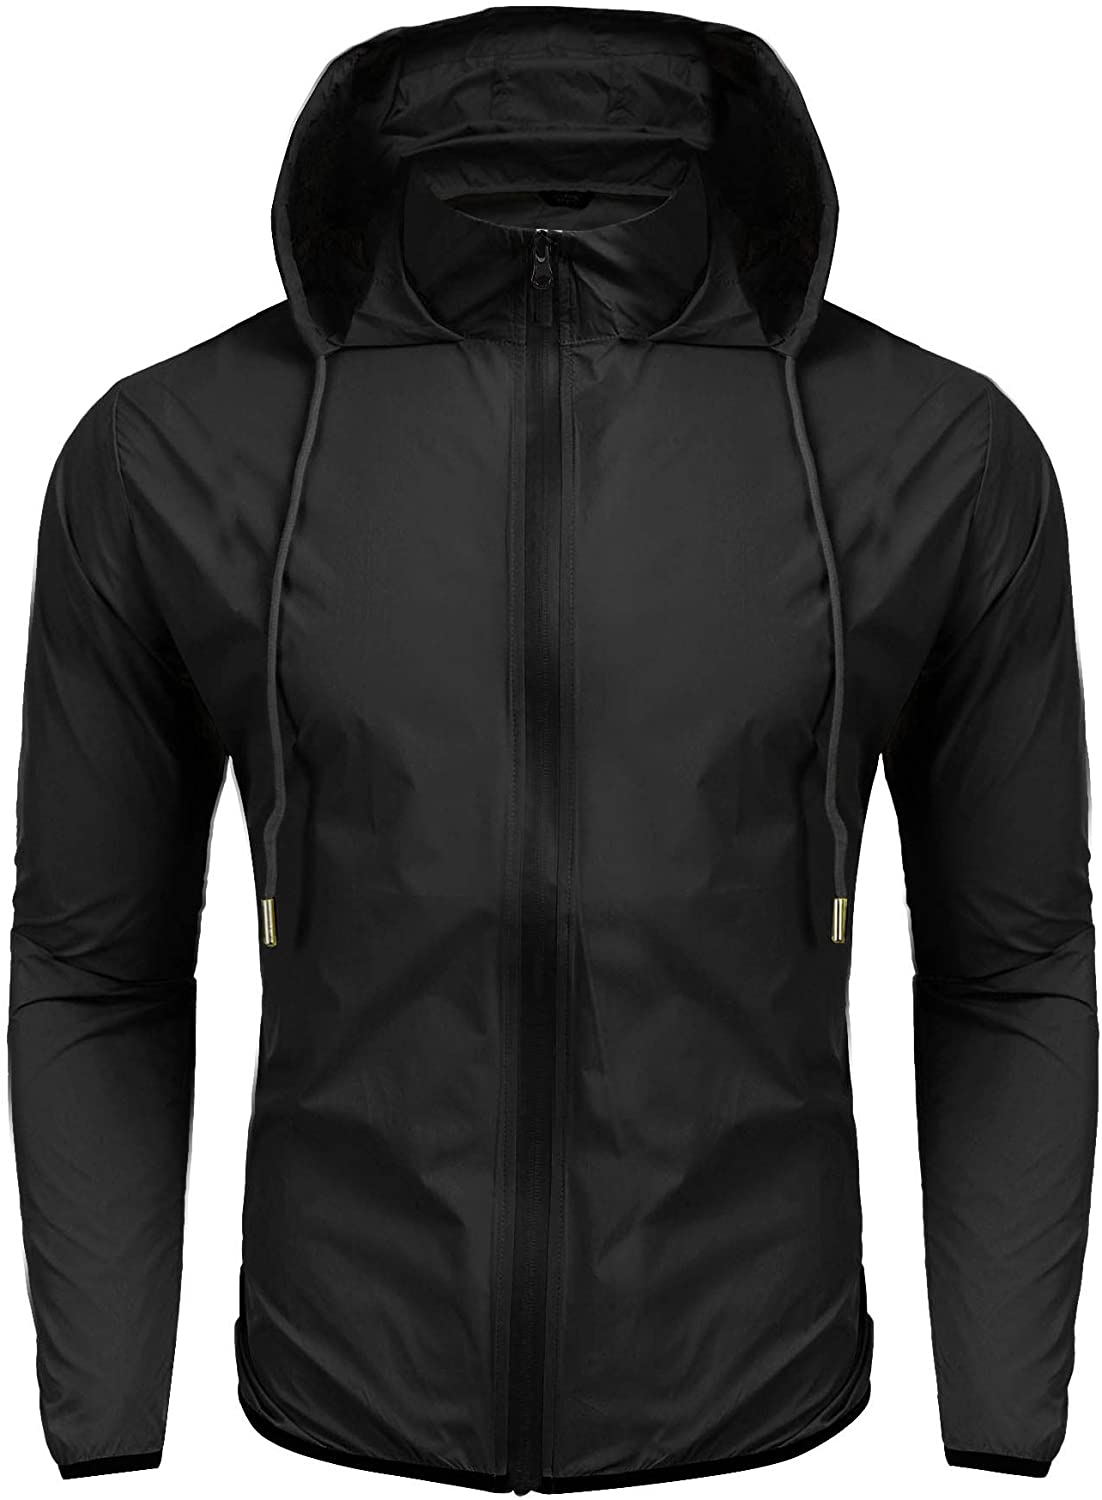 COOFANDY Unisex Packable Rain Jacket Lightweight Waterproof Hooded ...